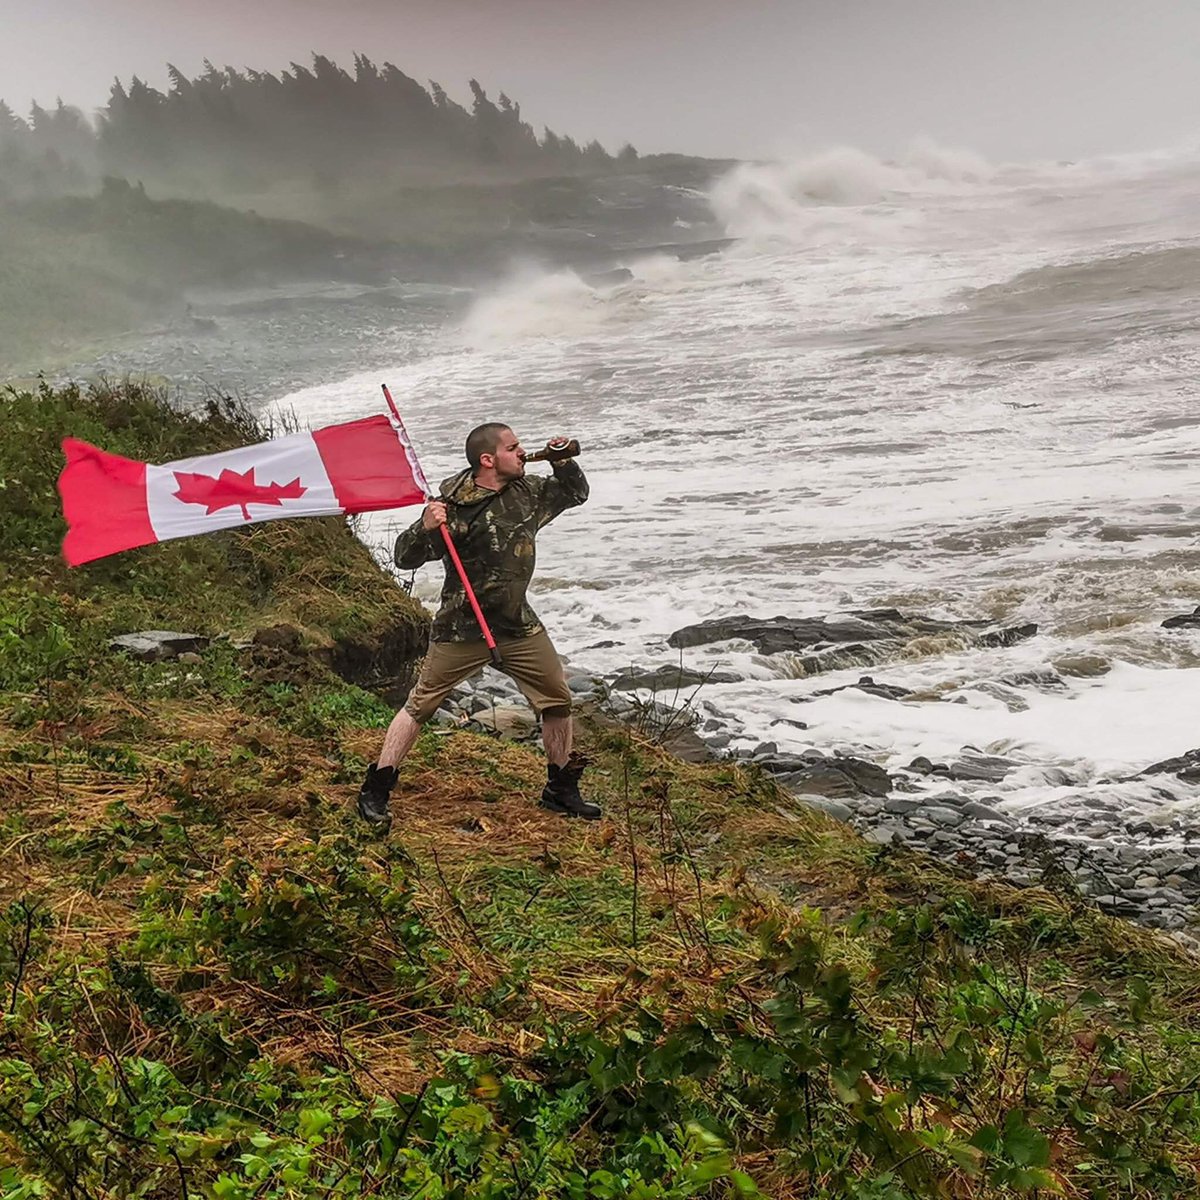 Meanwhile in Canada... #HurricaneDorain 

imgur.com/gallery/vpuRCyp